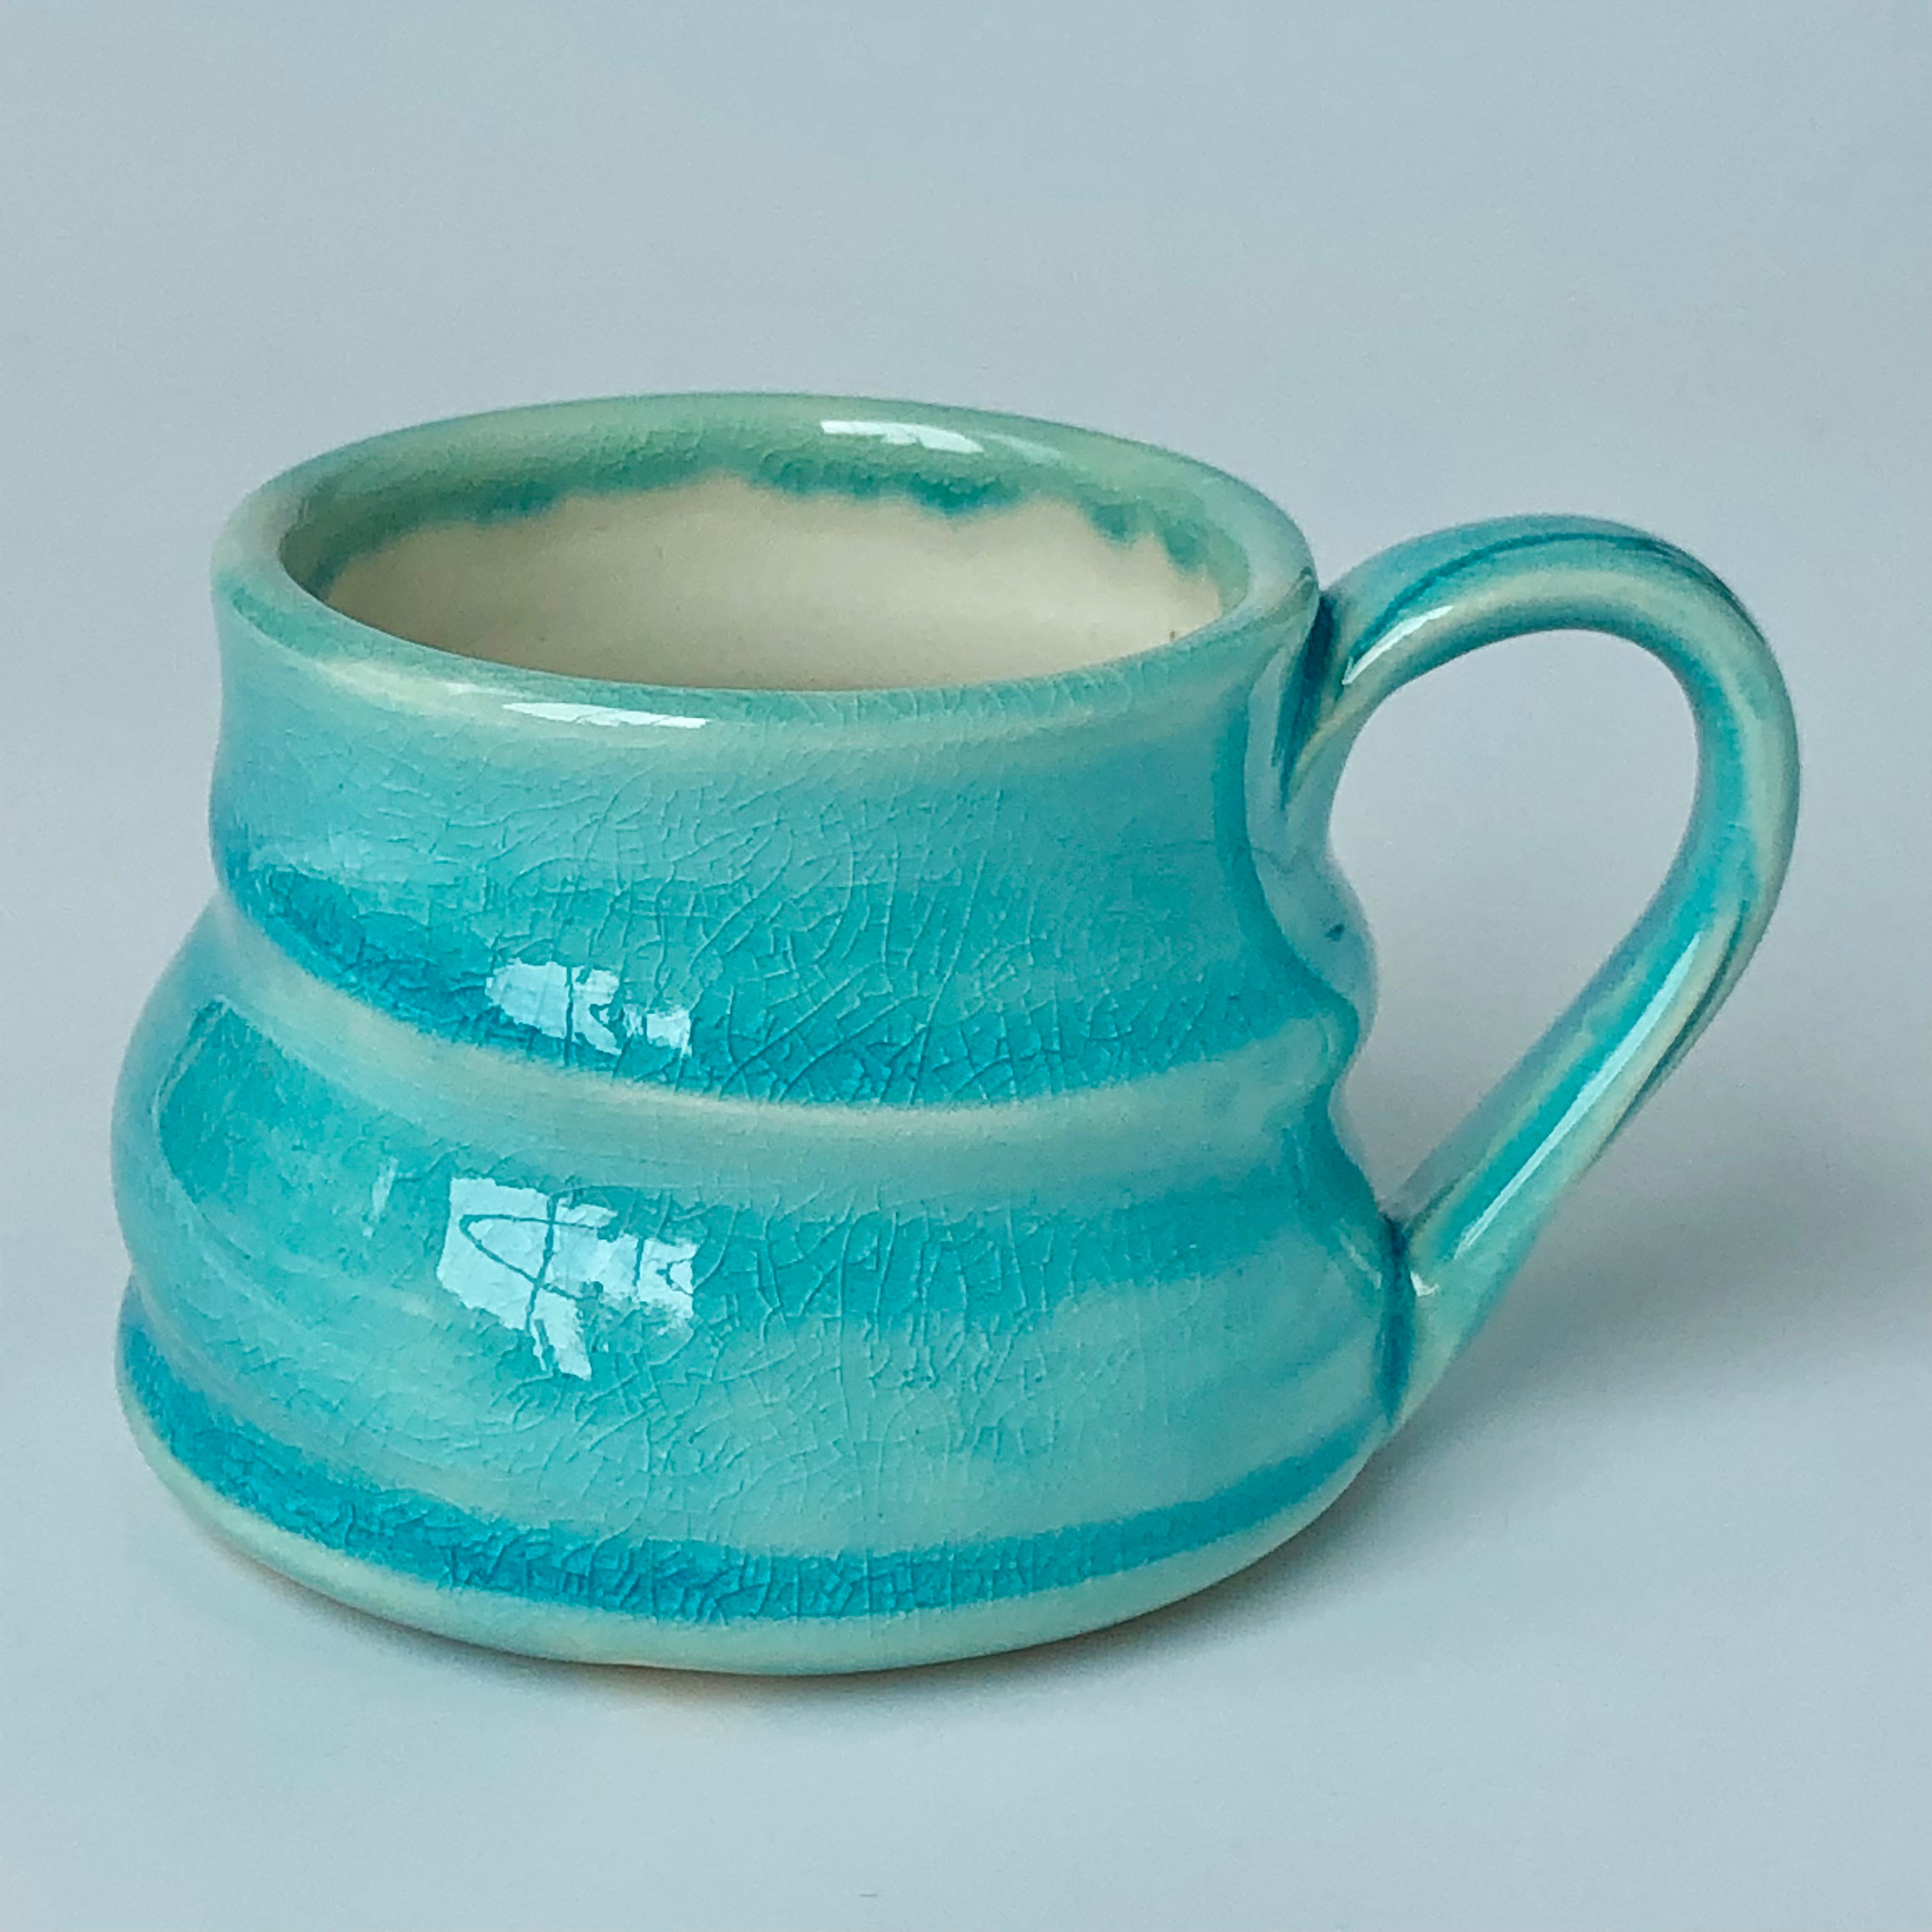 Twisty Shorty Mug in Kalamalka Blue